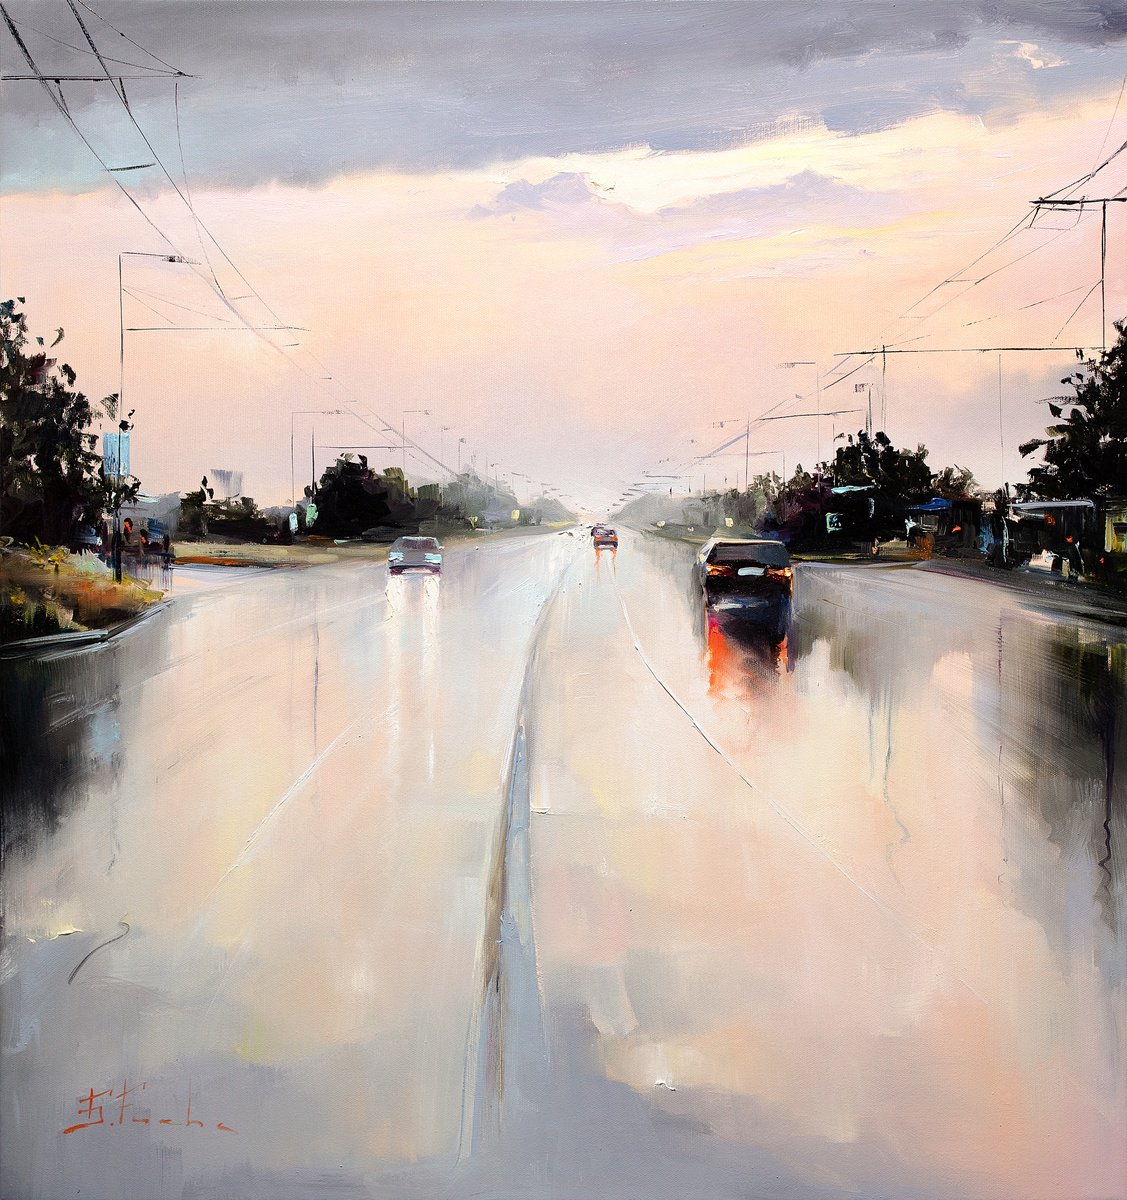 After The Warm Rain by Bozhena Fuchs